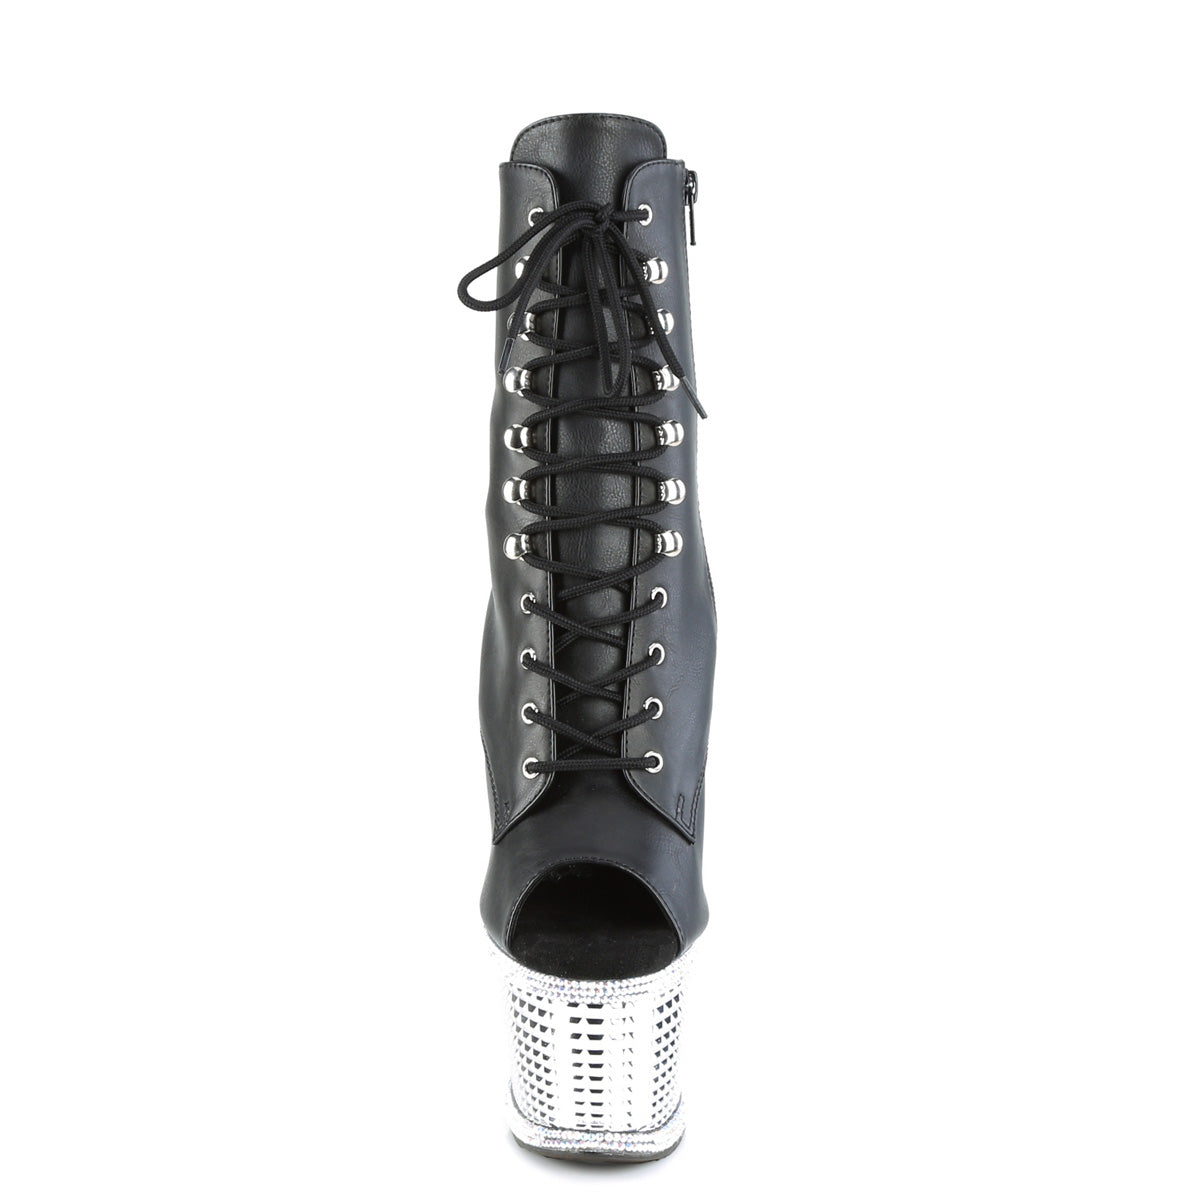 SPECTATOR-1021RS Black & Silver Calf High Peep Toe Boots